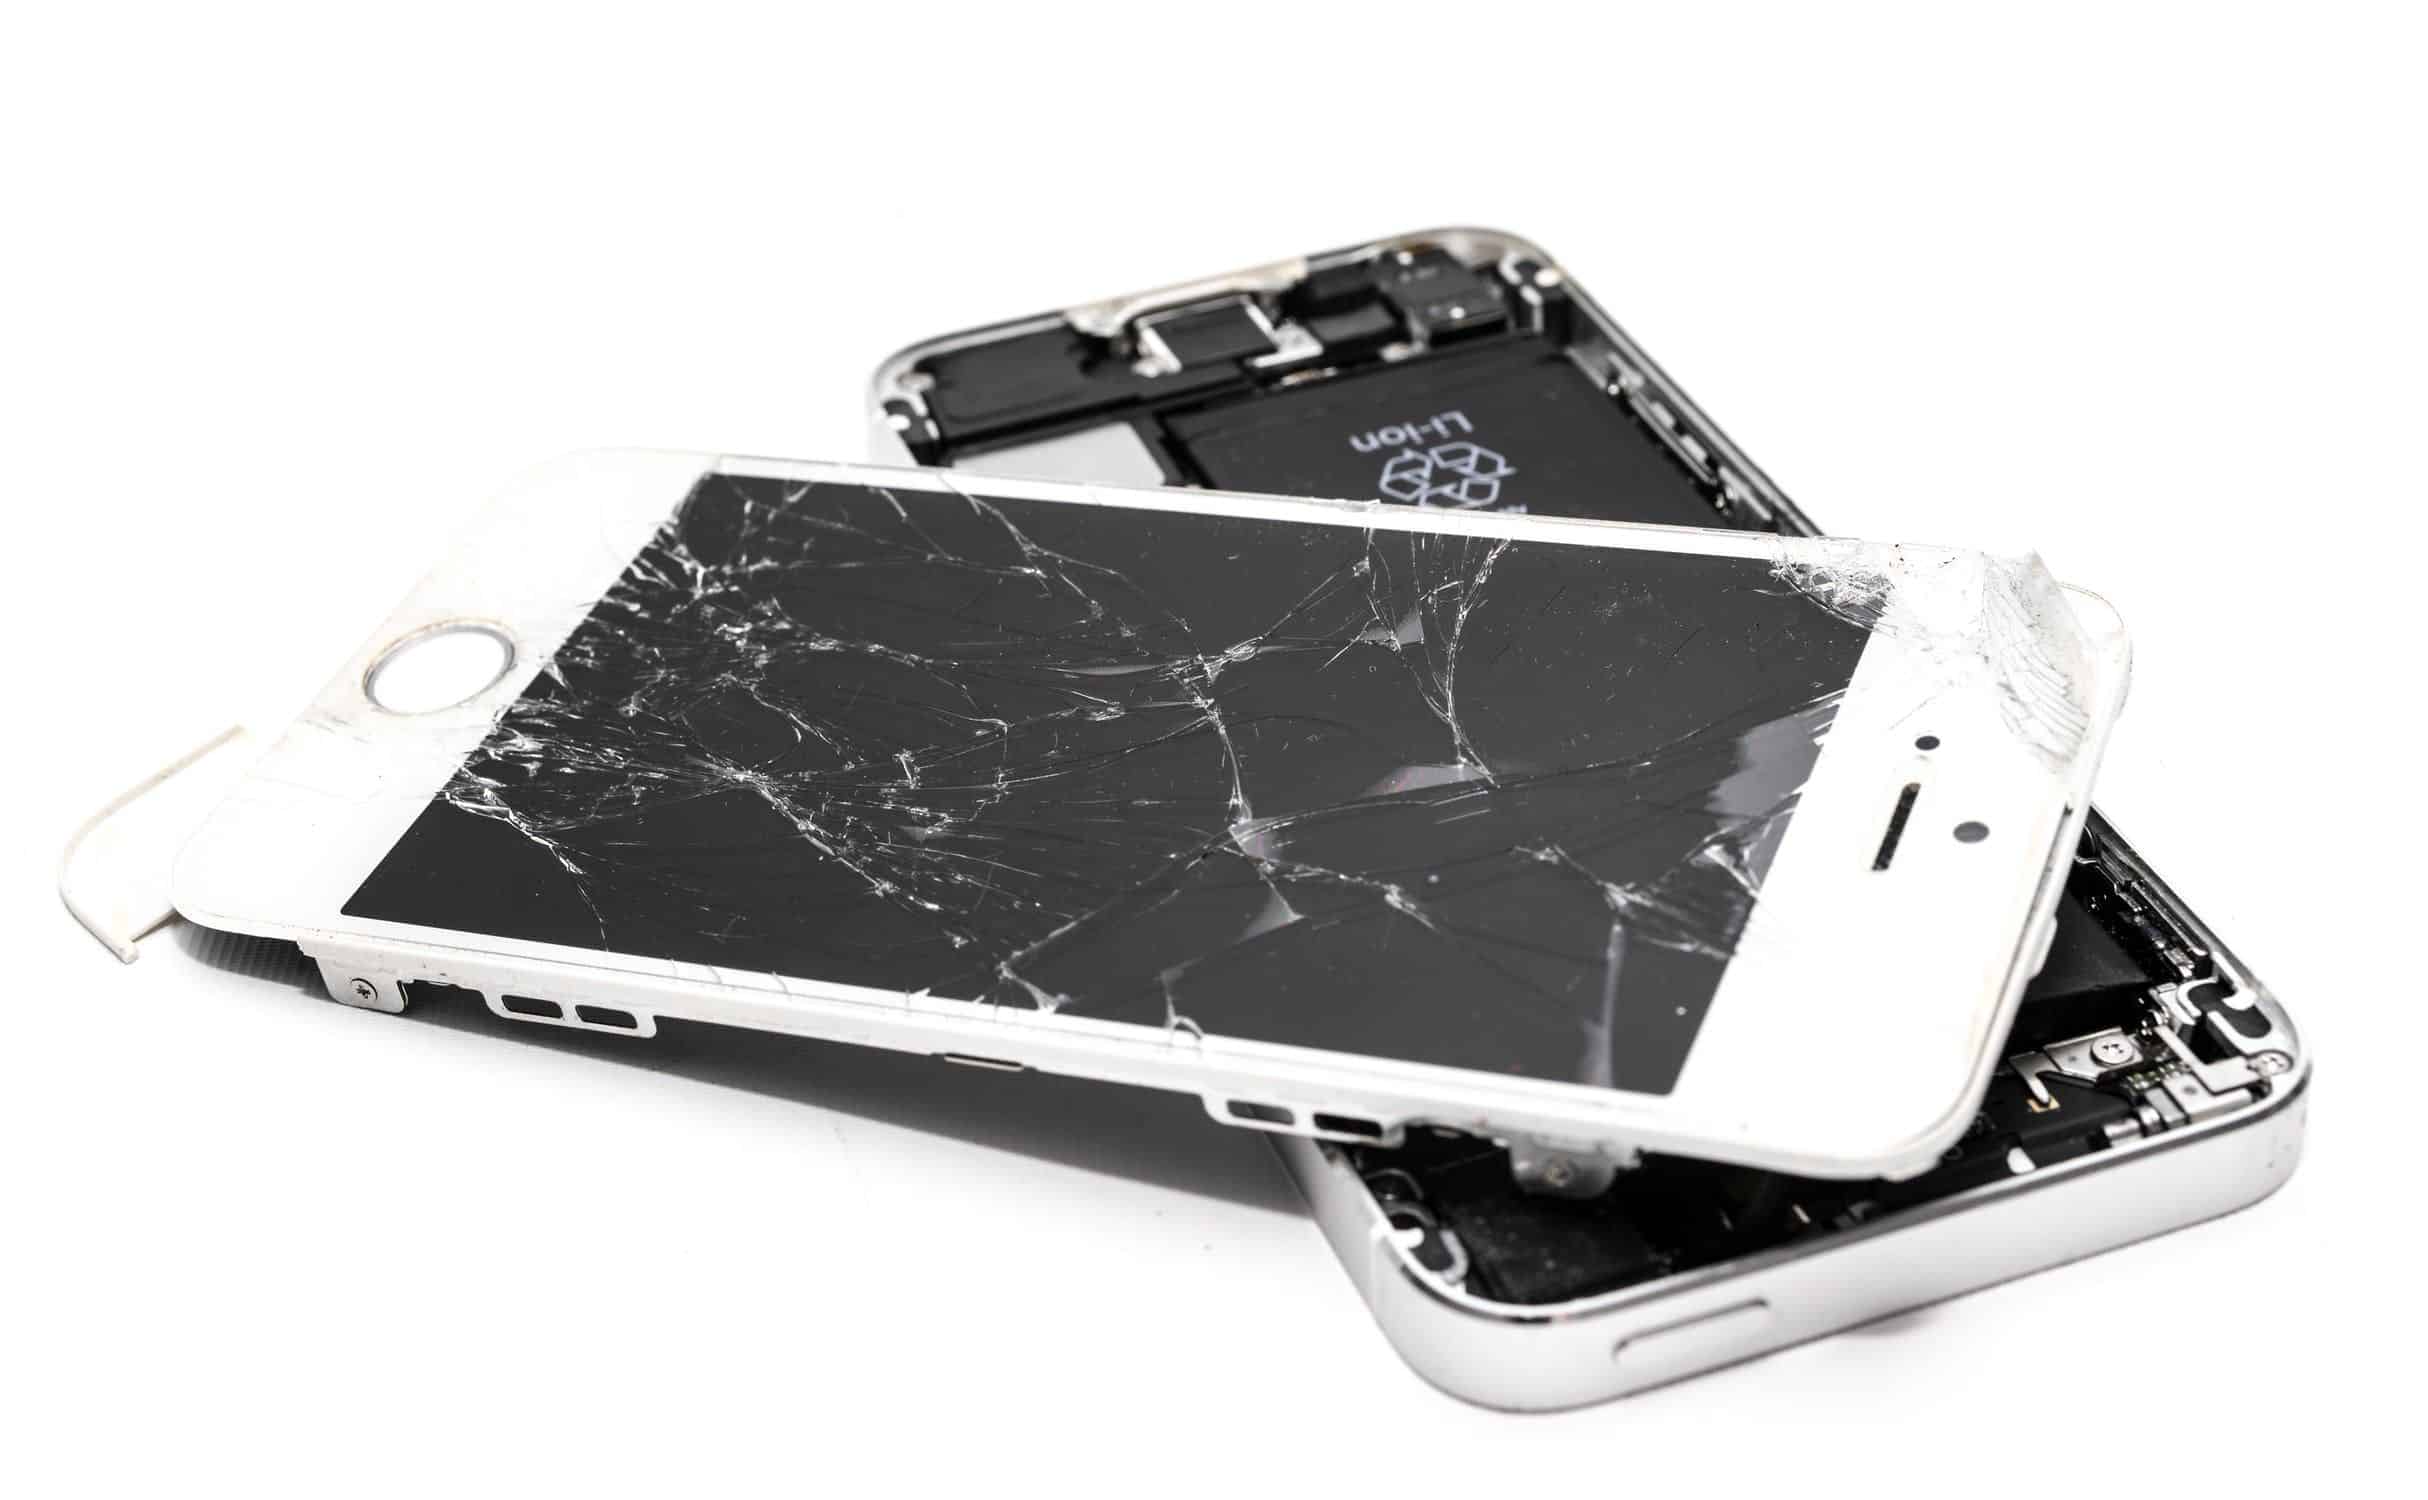 Broken Mobile Phone — Computer Repairs in Gold Coast, QLD